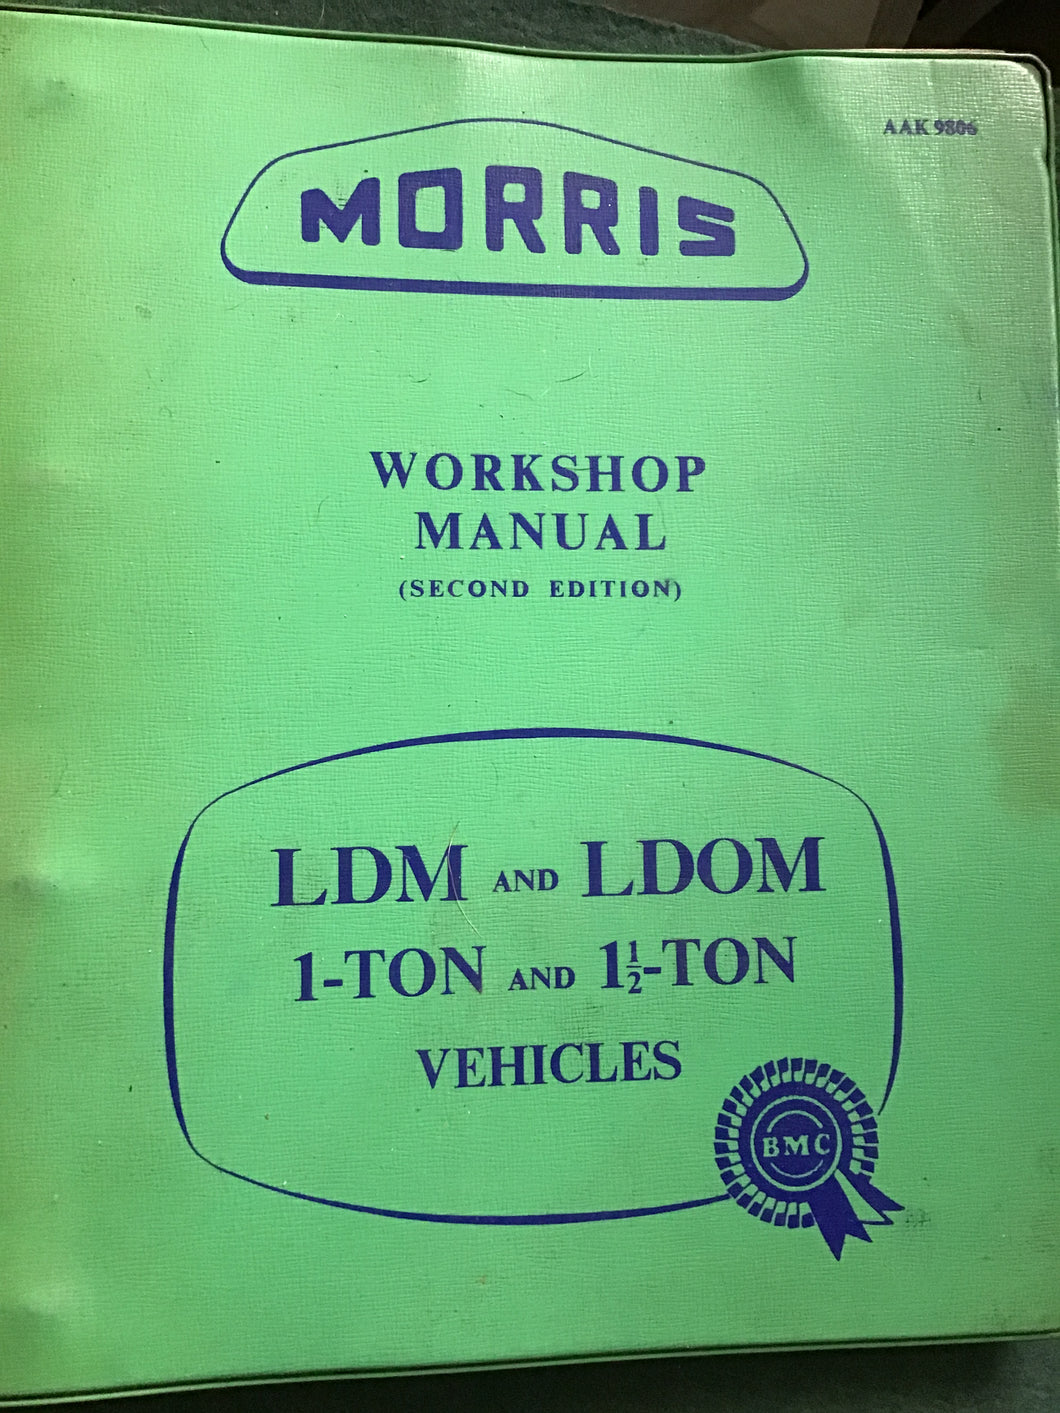 MORRIS workshop manual LDM and LDOM 1-ton and 1 1/2 ton Vehicles AAK 9806